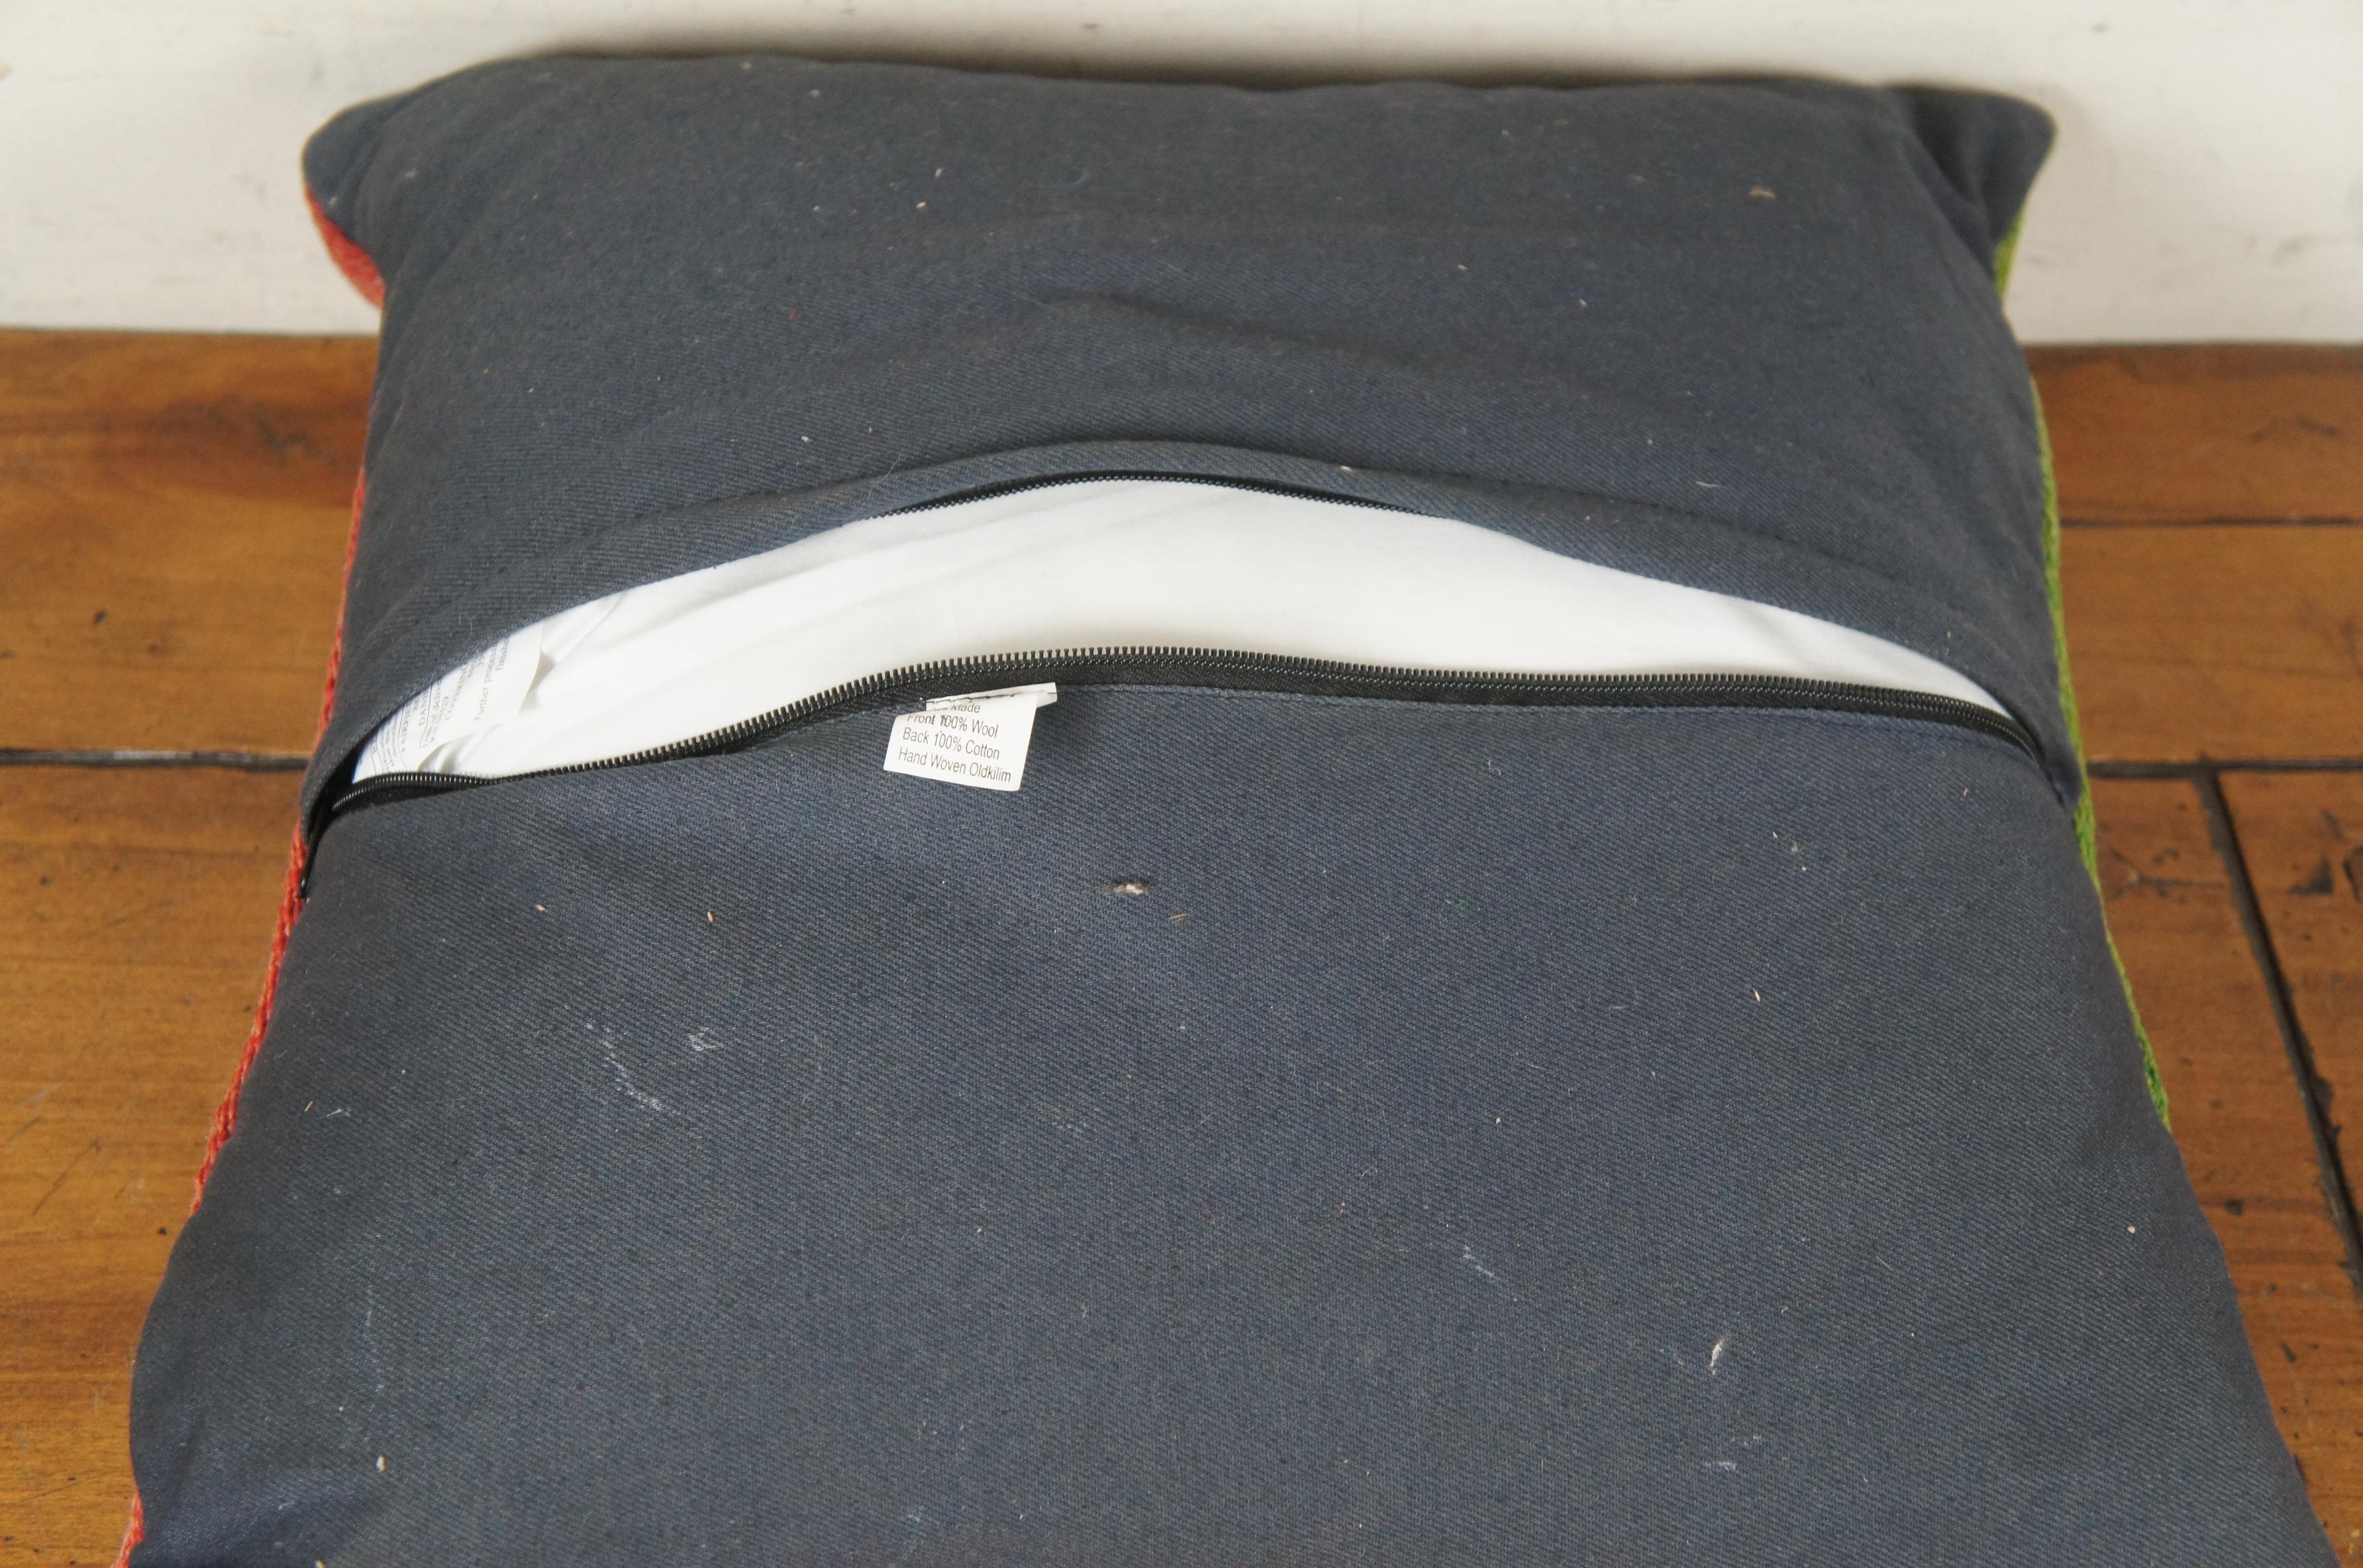 Turkish Hand Woven Wool Oldkilim Kilim Geometric Striped Lumbar Throw Pillow 18